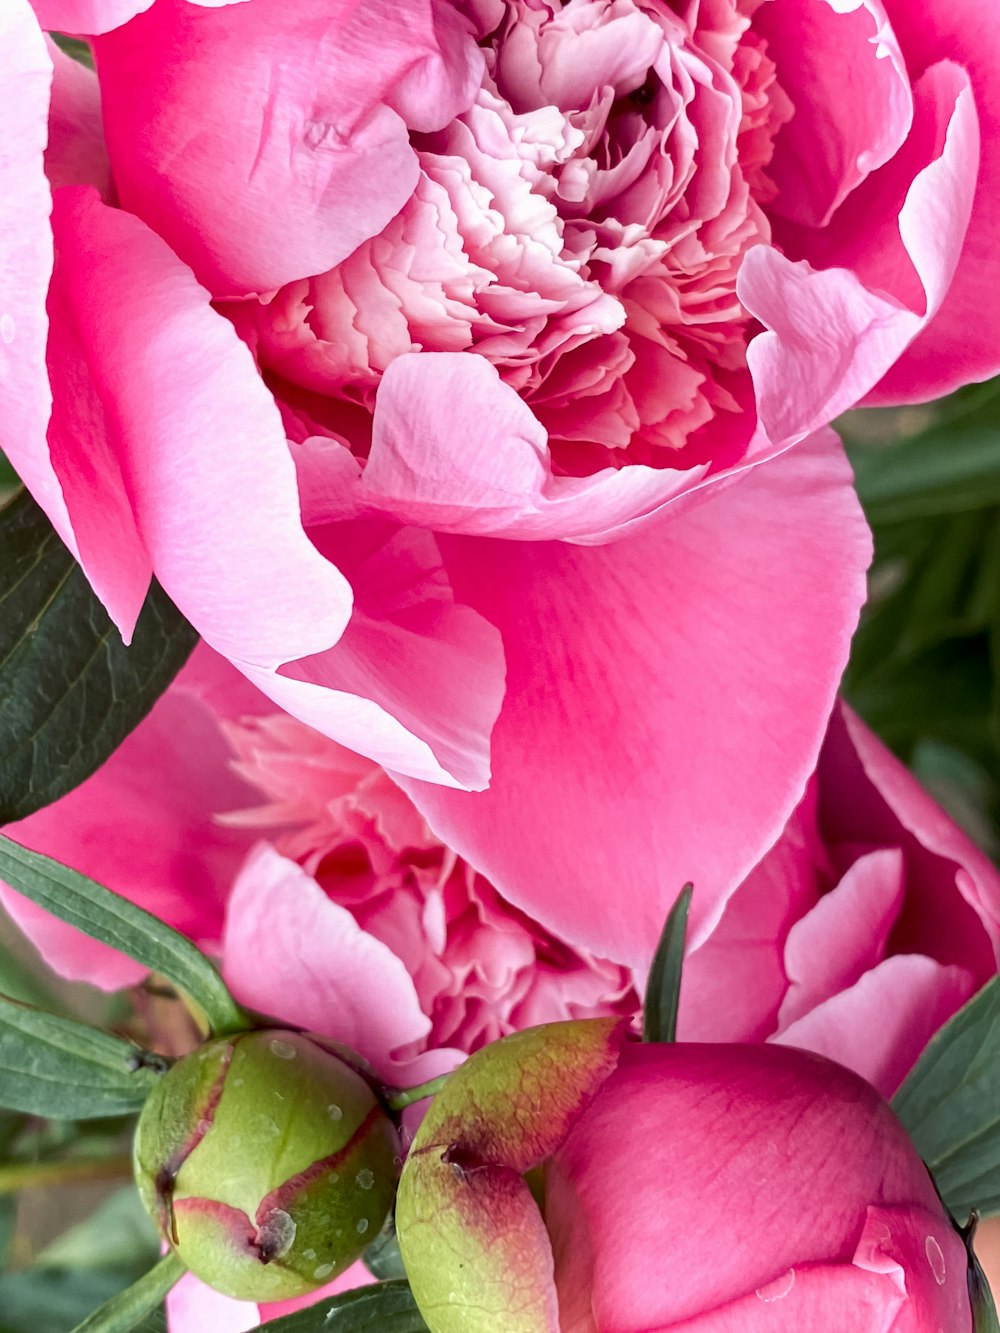 a close up of a pink flower